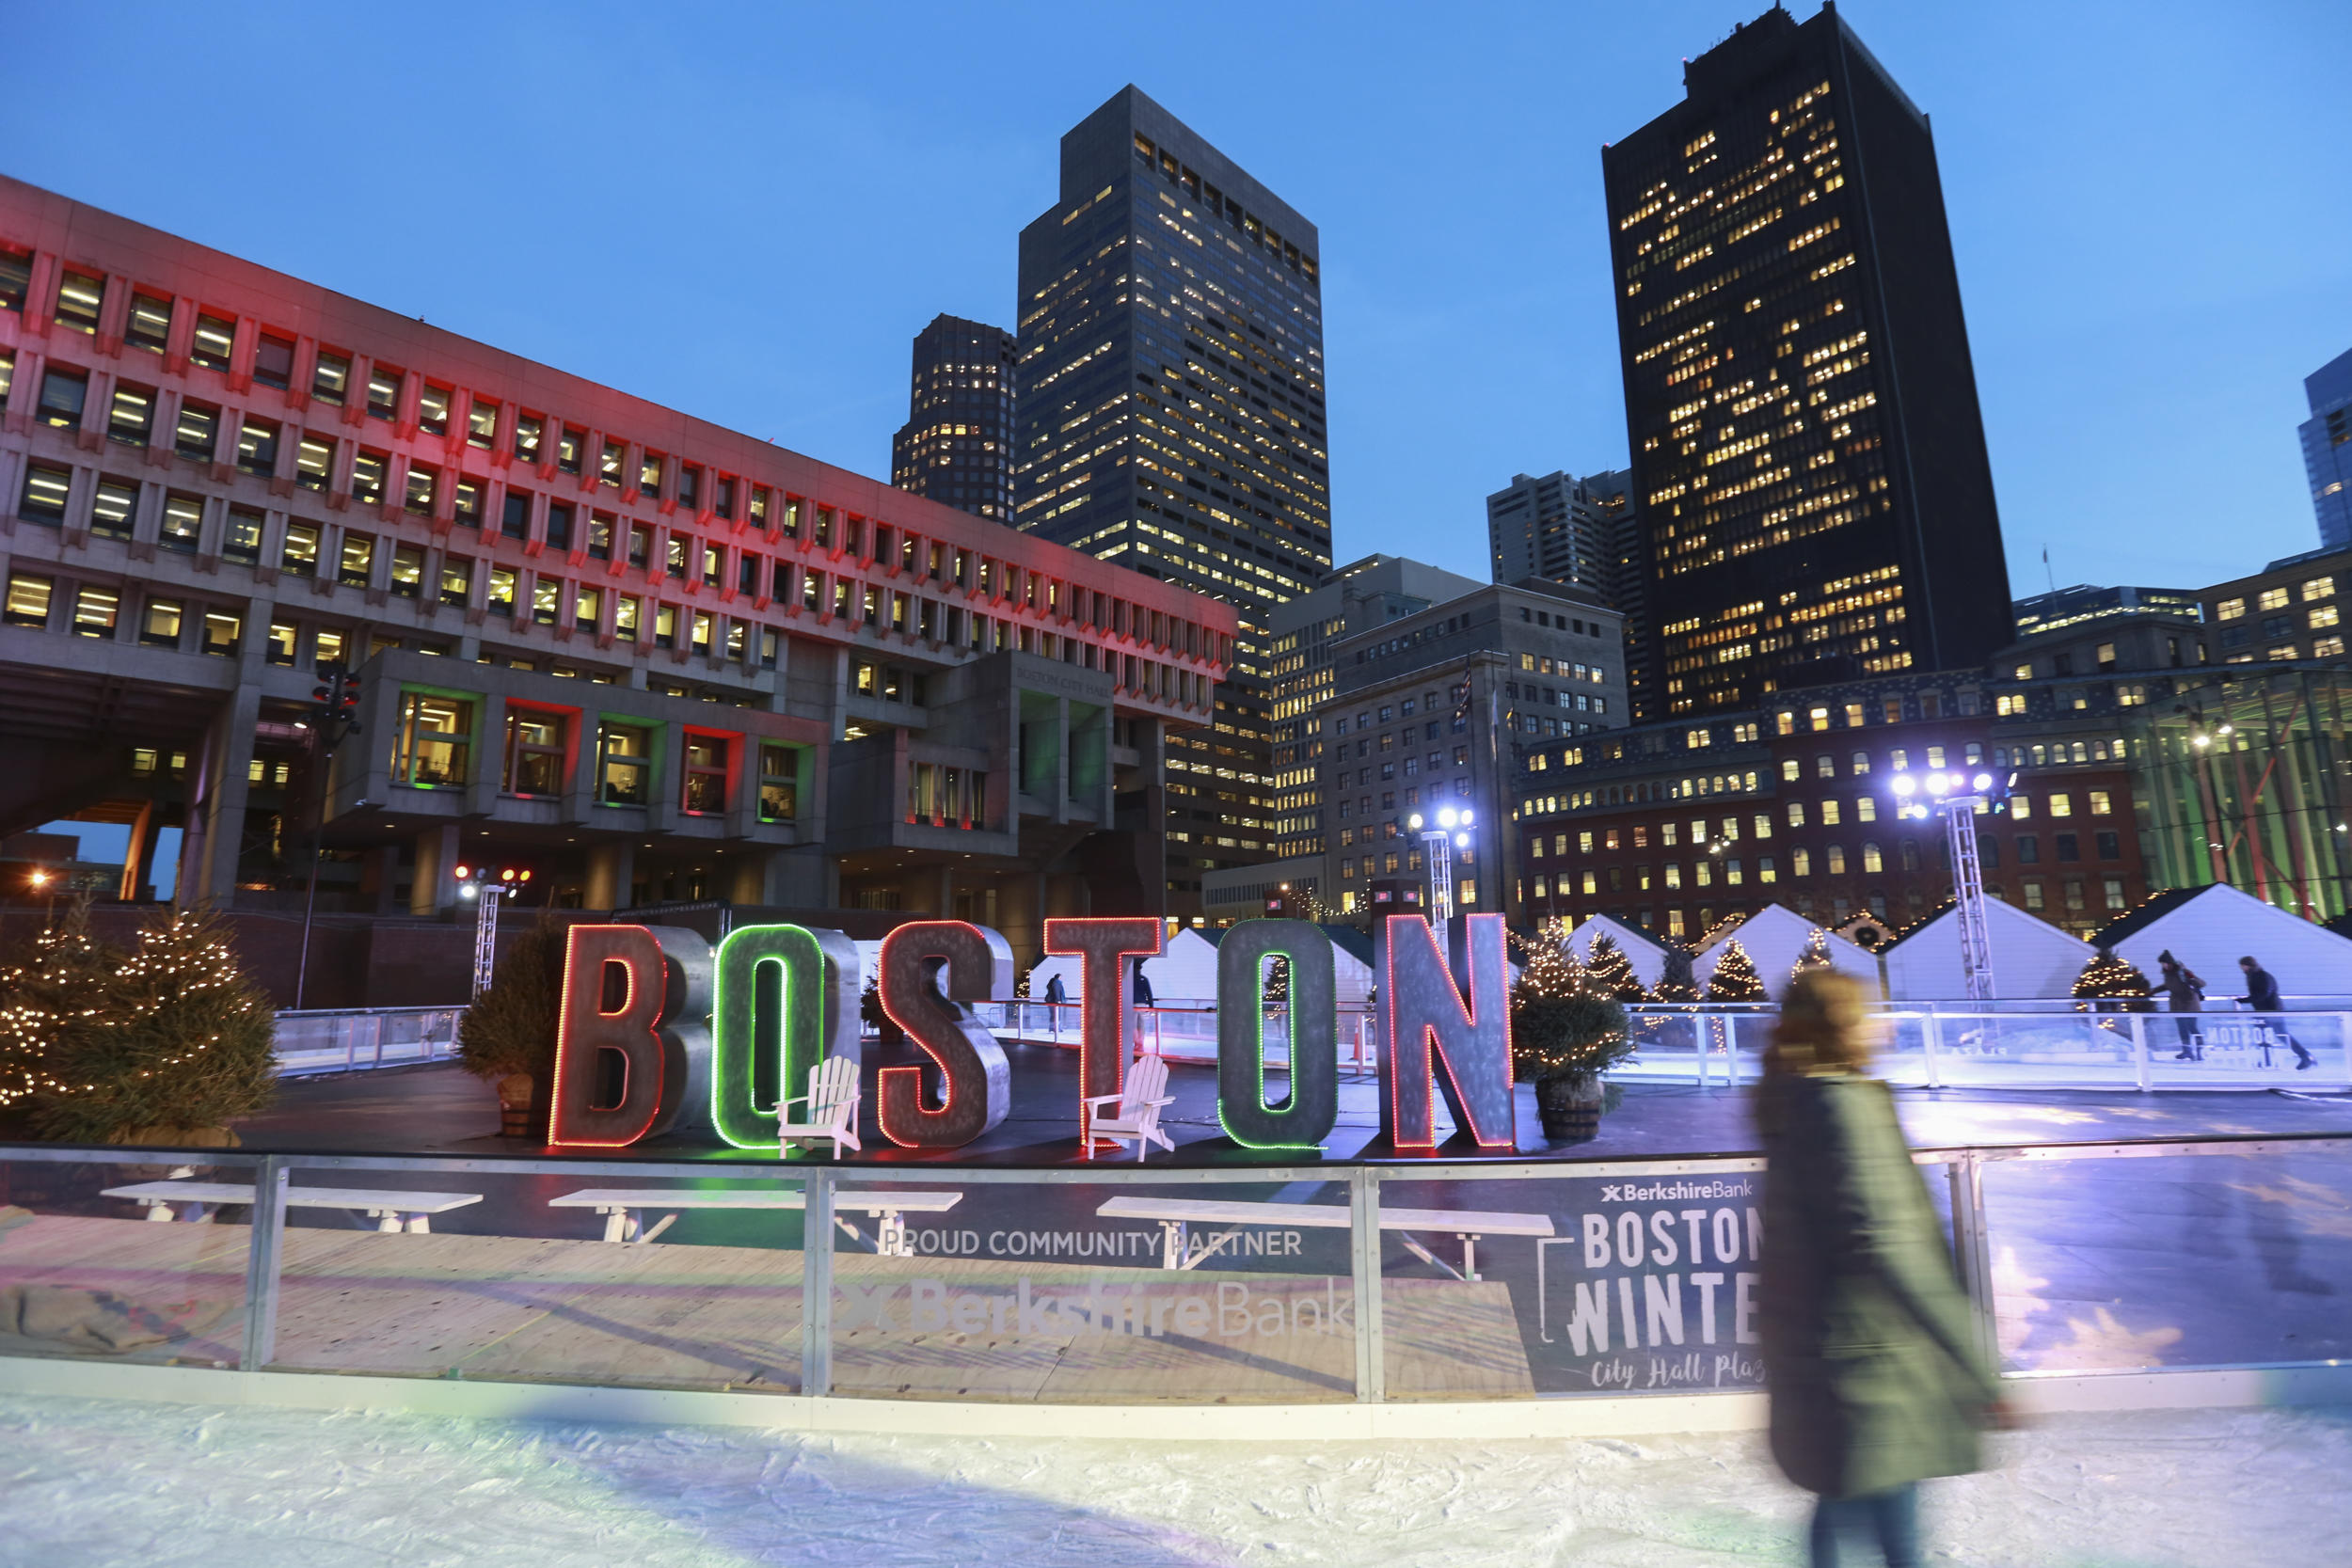 Boston Winter festival adds charities to its '17 edition | Boston Herald